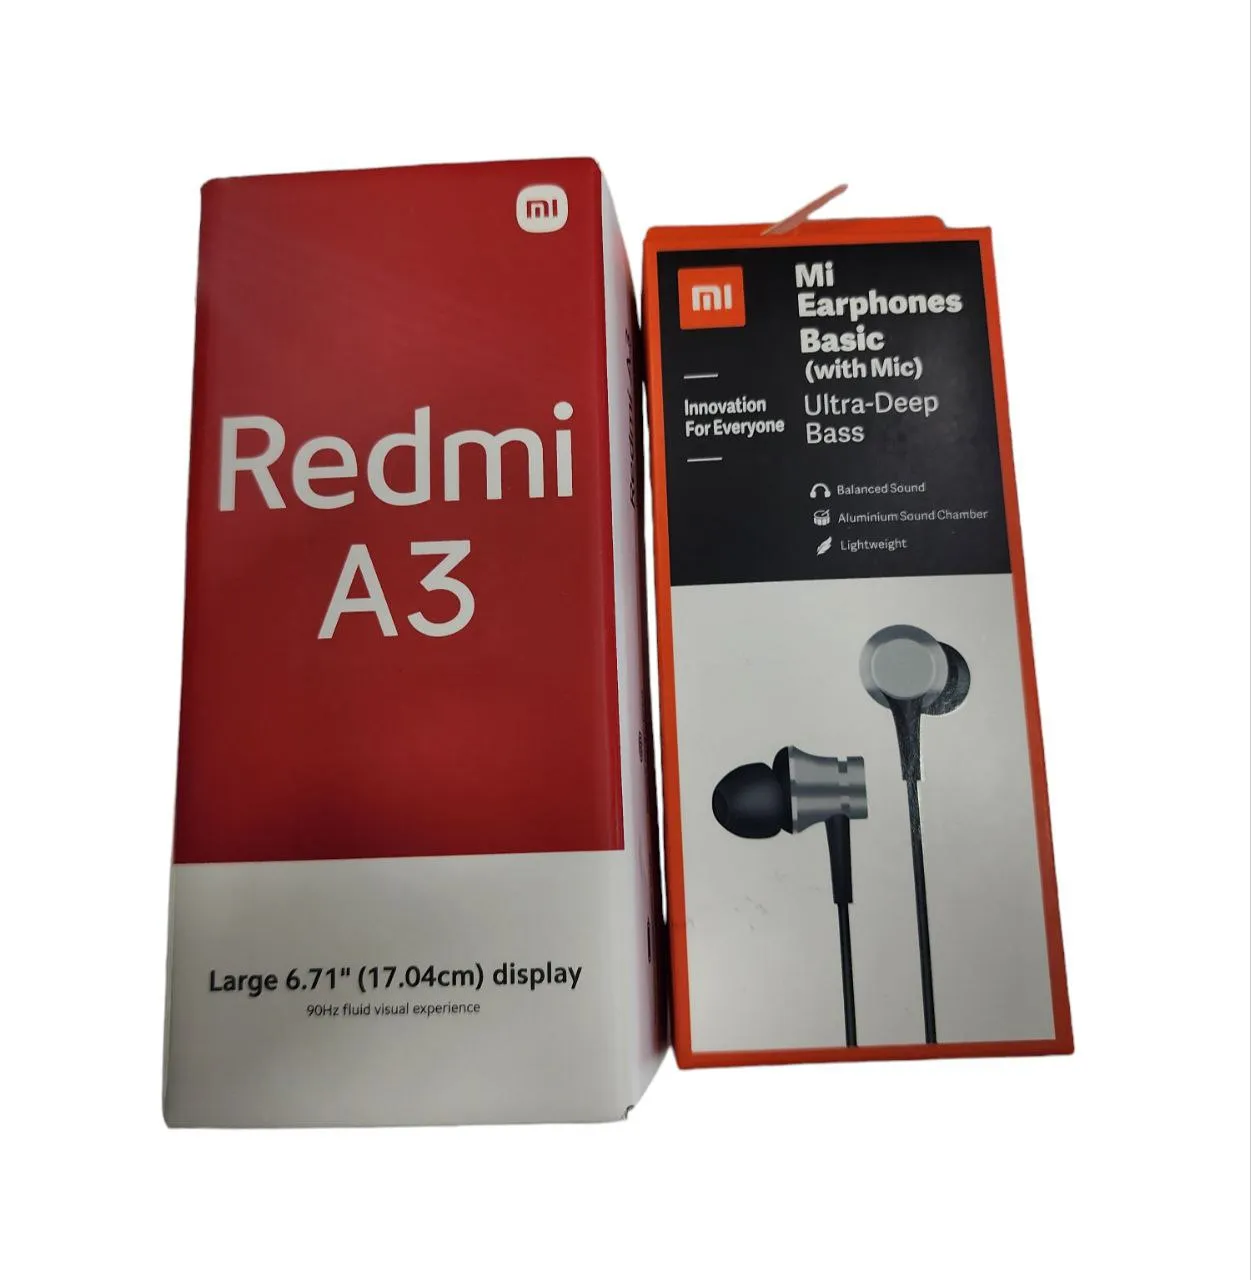  Celular Xiaomi Redmi A3 64G y 3RAM  + Auriculares MI earphones